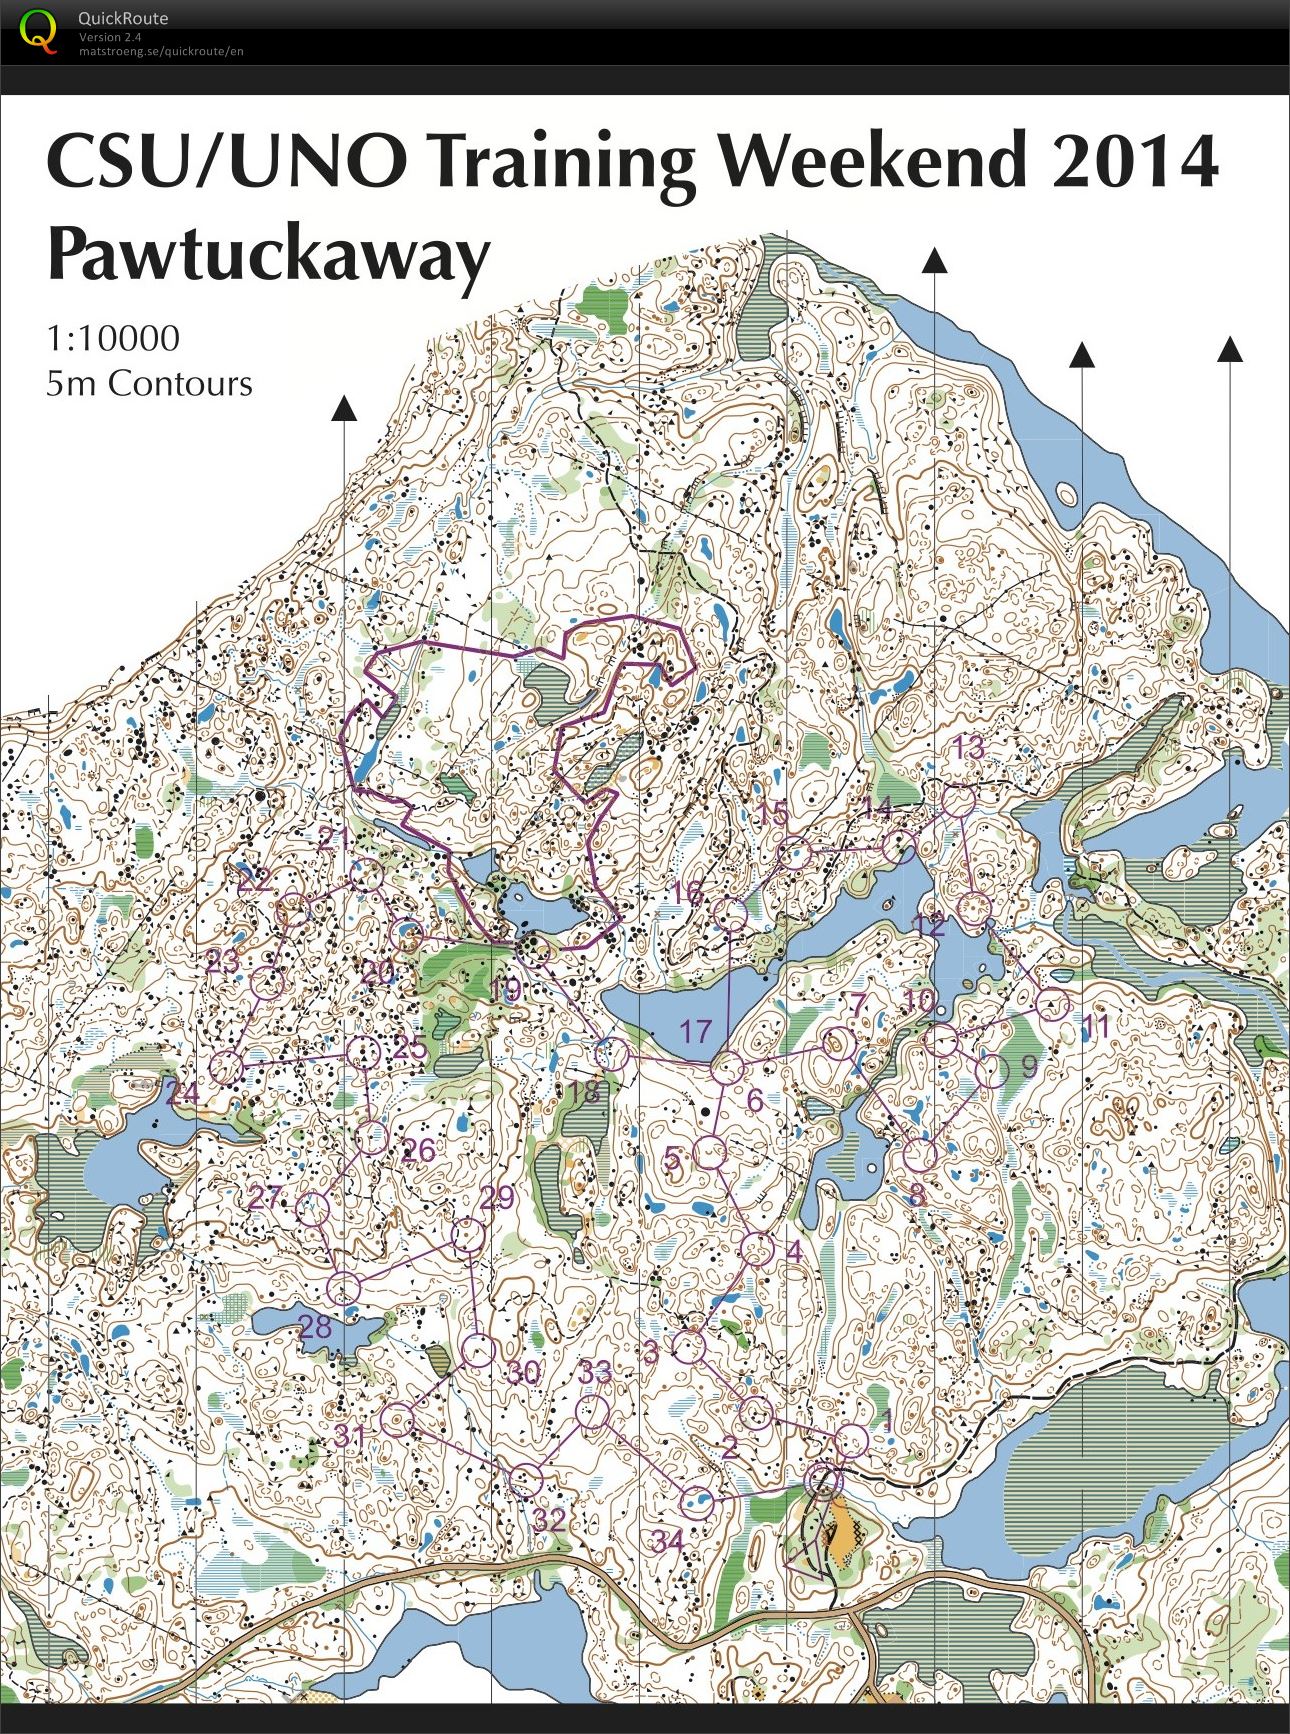 Pawtuckaway control pick (24/05/2014)